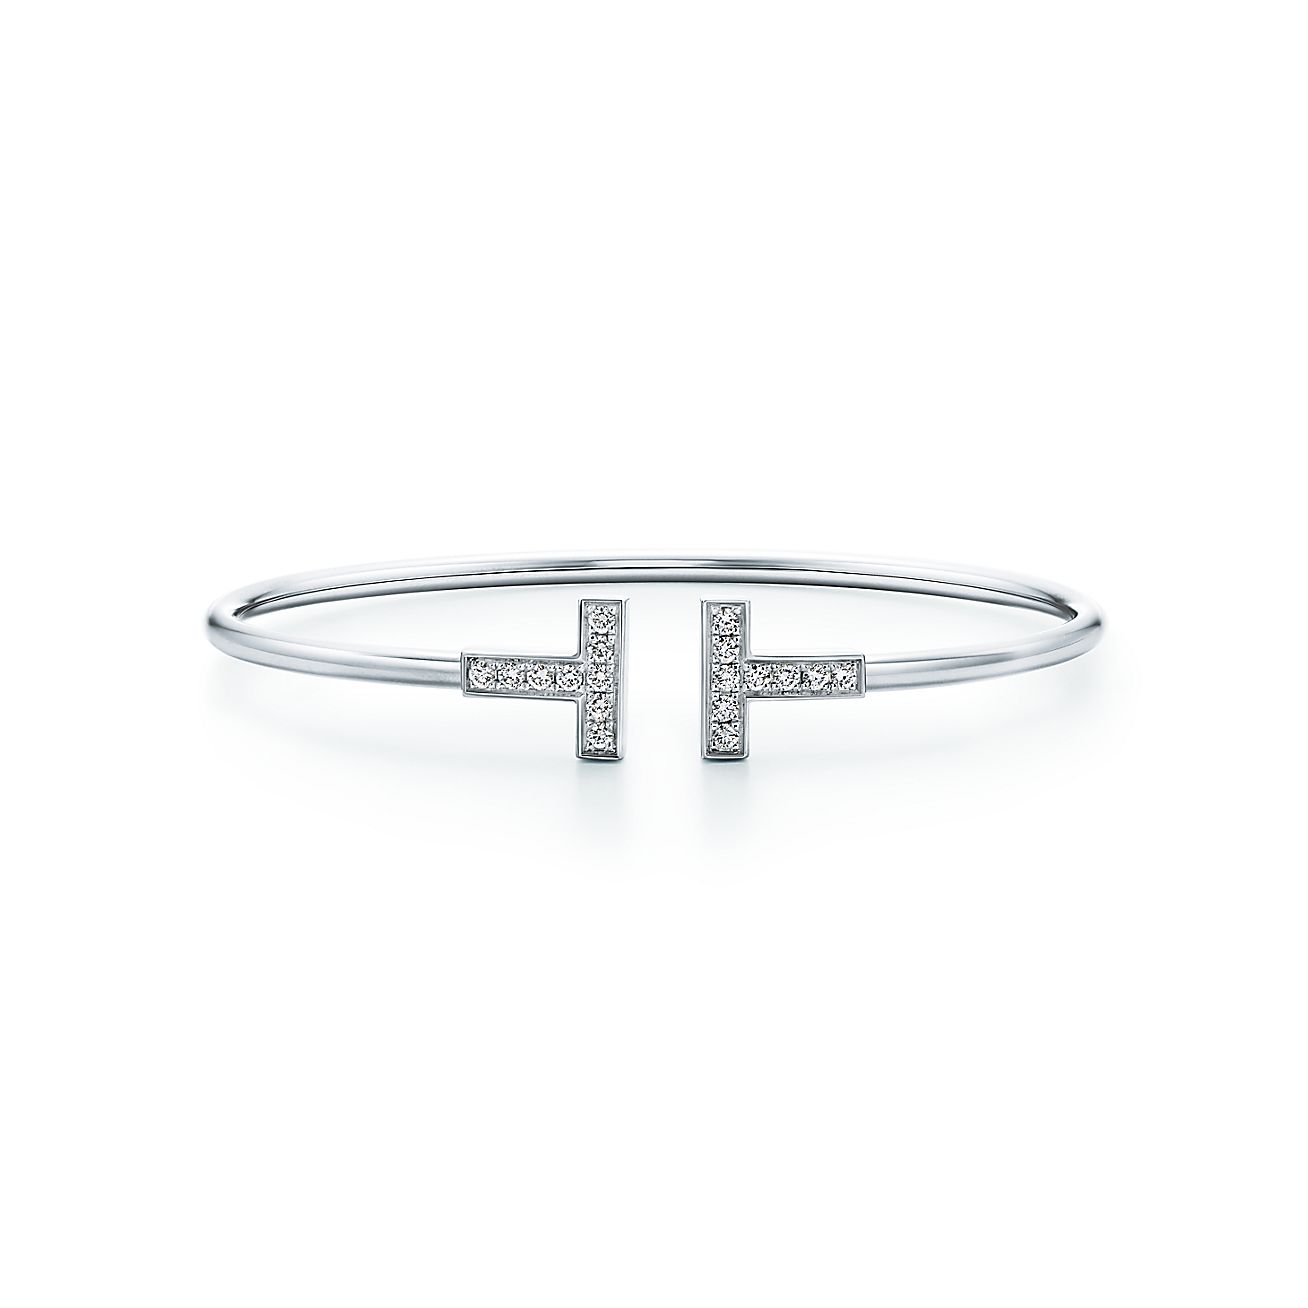 T diamond wire bracelet